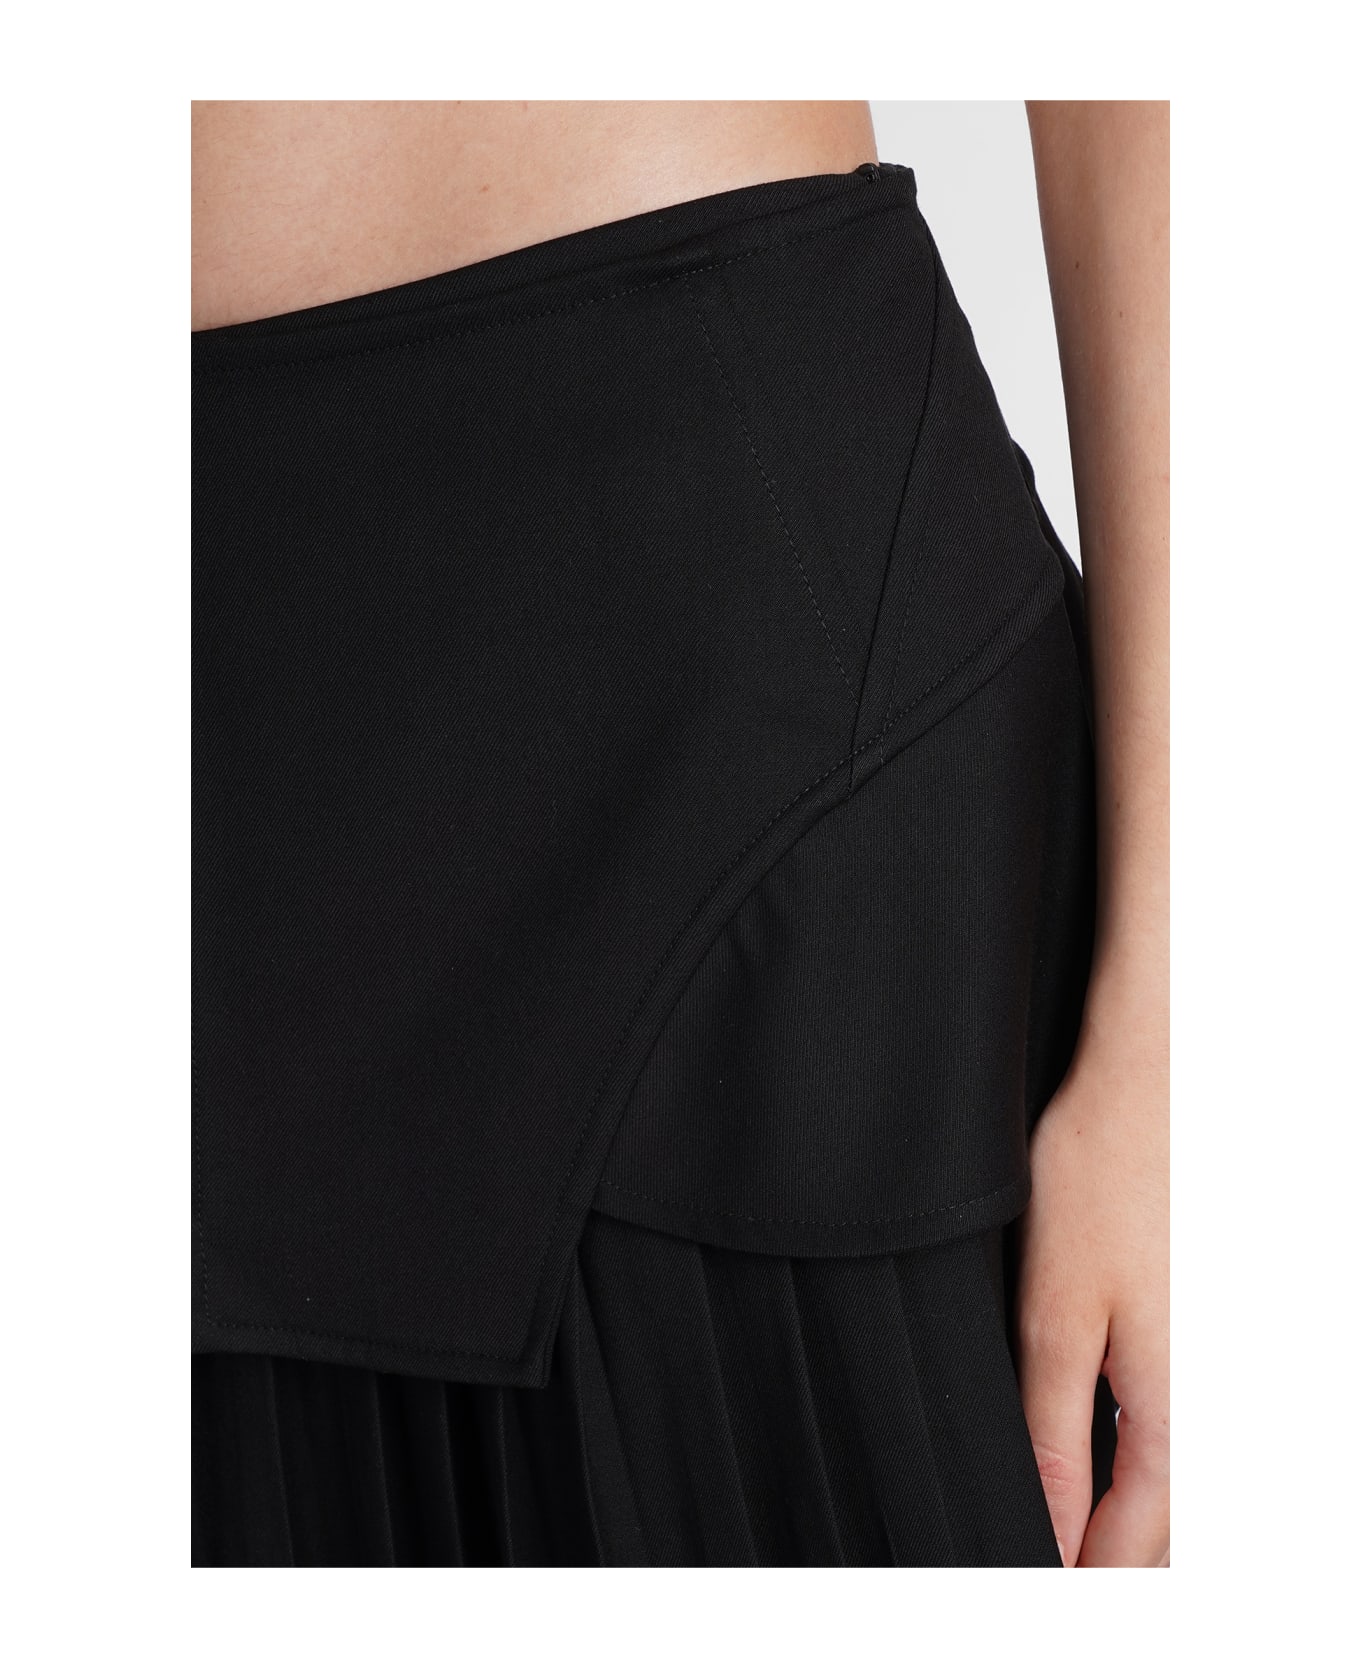 ANDREĀDAMO Skirt In Black Polyester - black